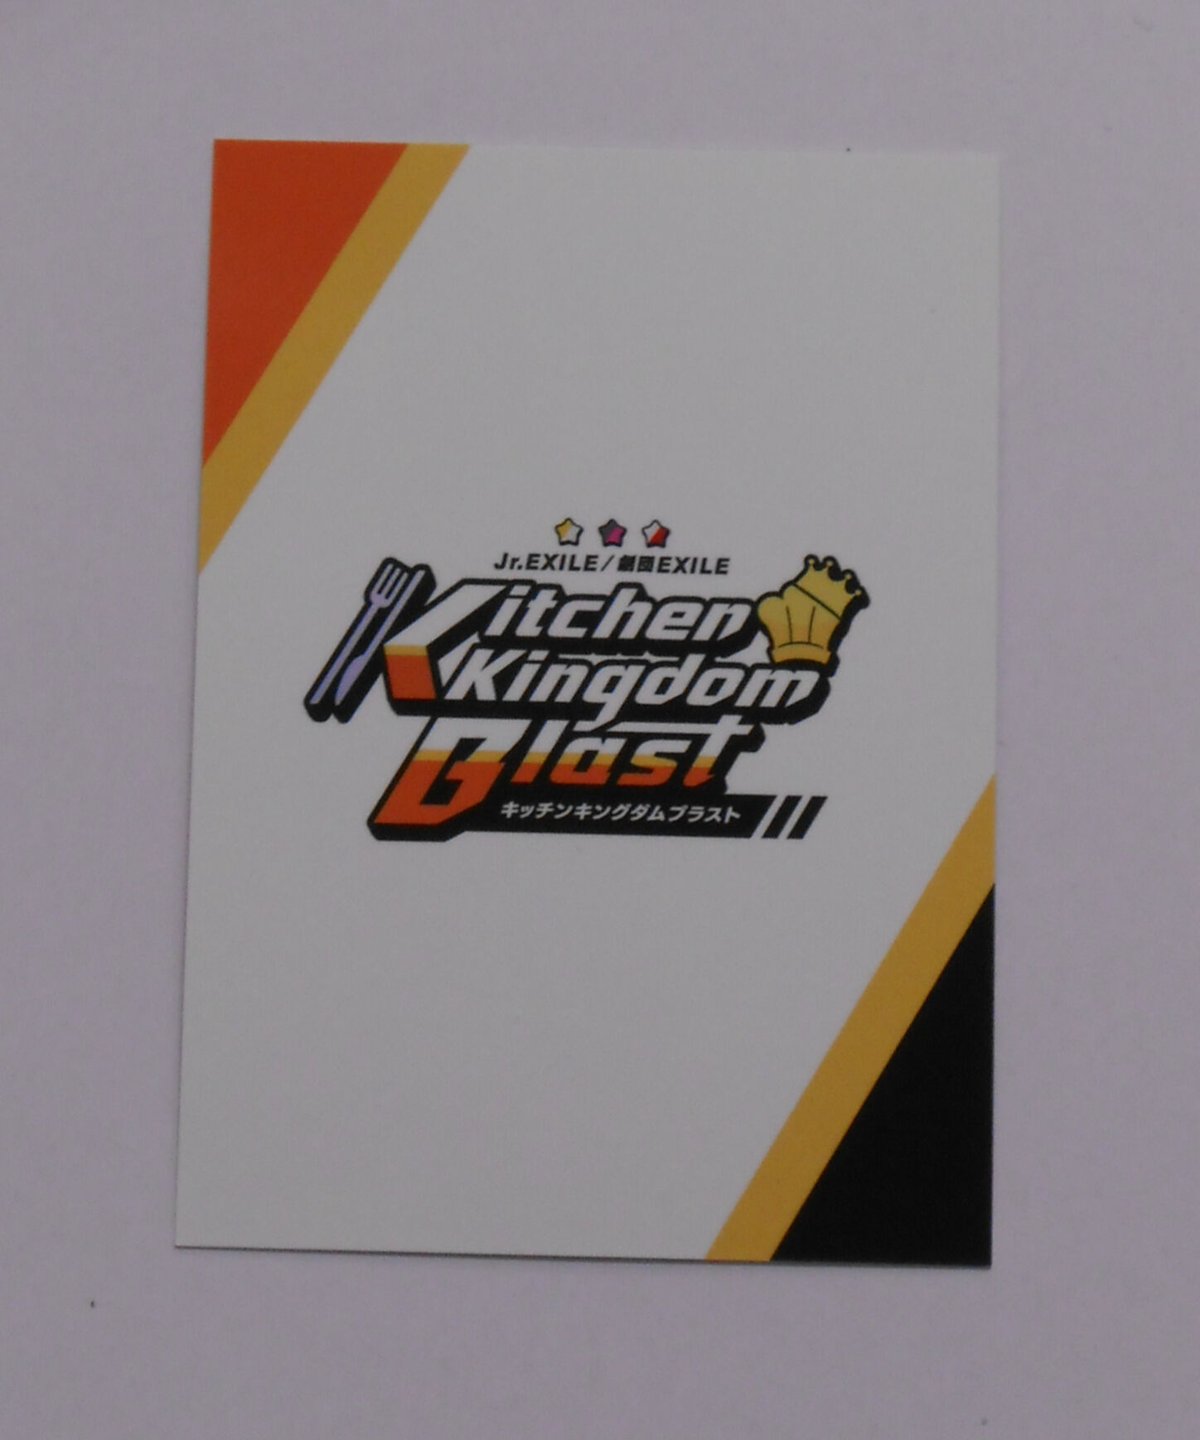 Kitchen Kingdom ビジュアルカード THE RAMPAGE 川村壱馬 | K-B...